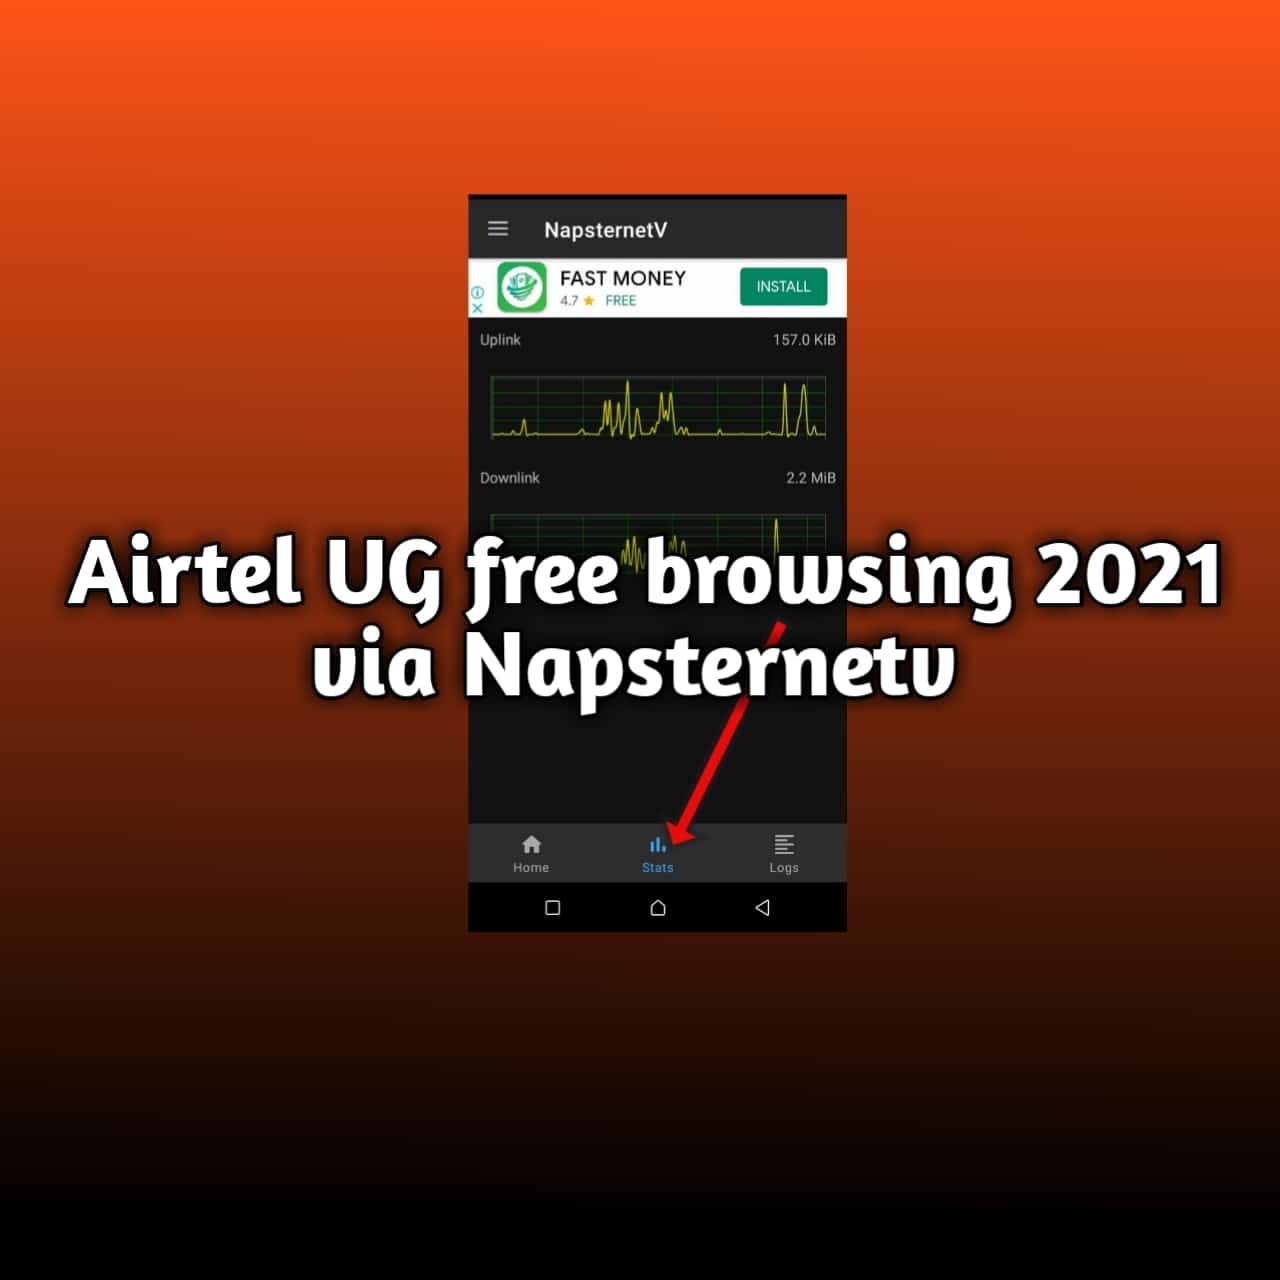 Airtel Uganda free internet